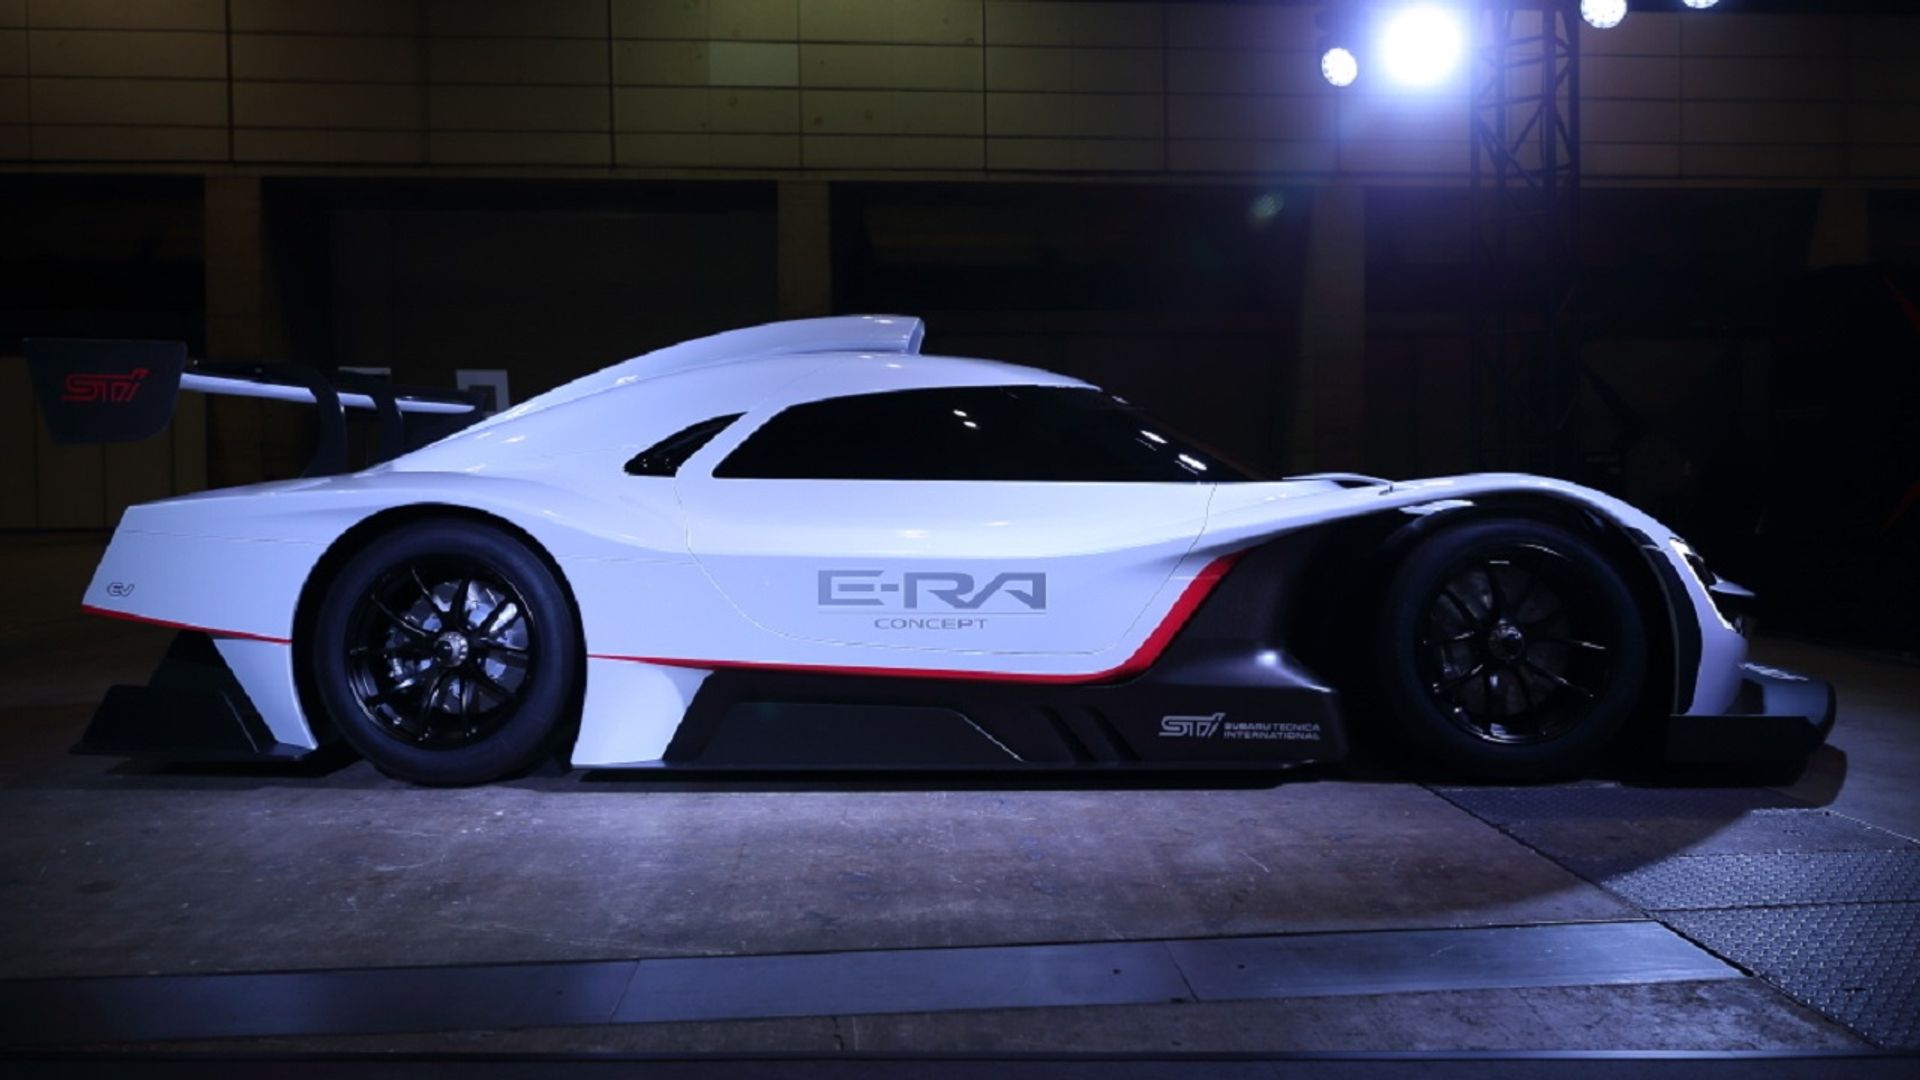 Subaru showcases electric race car concept at Tokyo Auto Salon